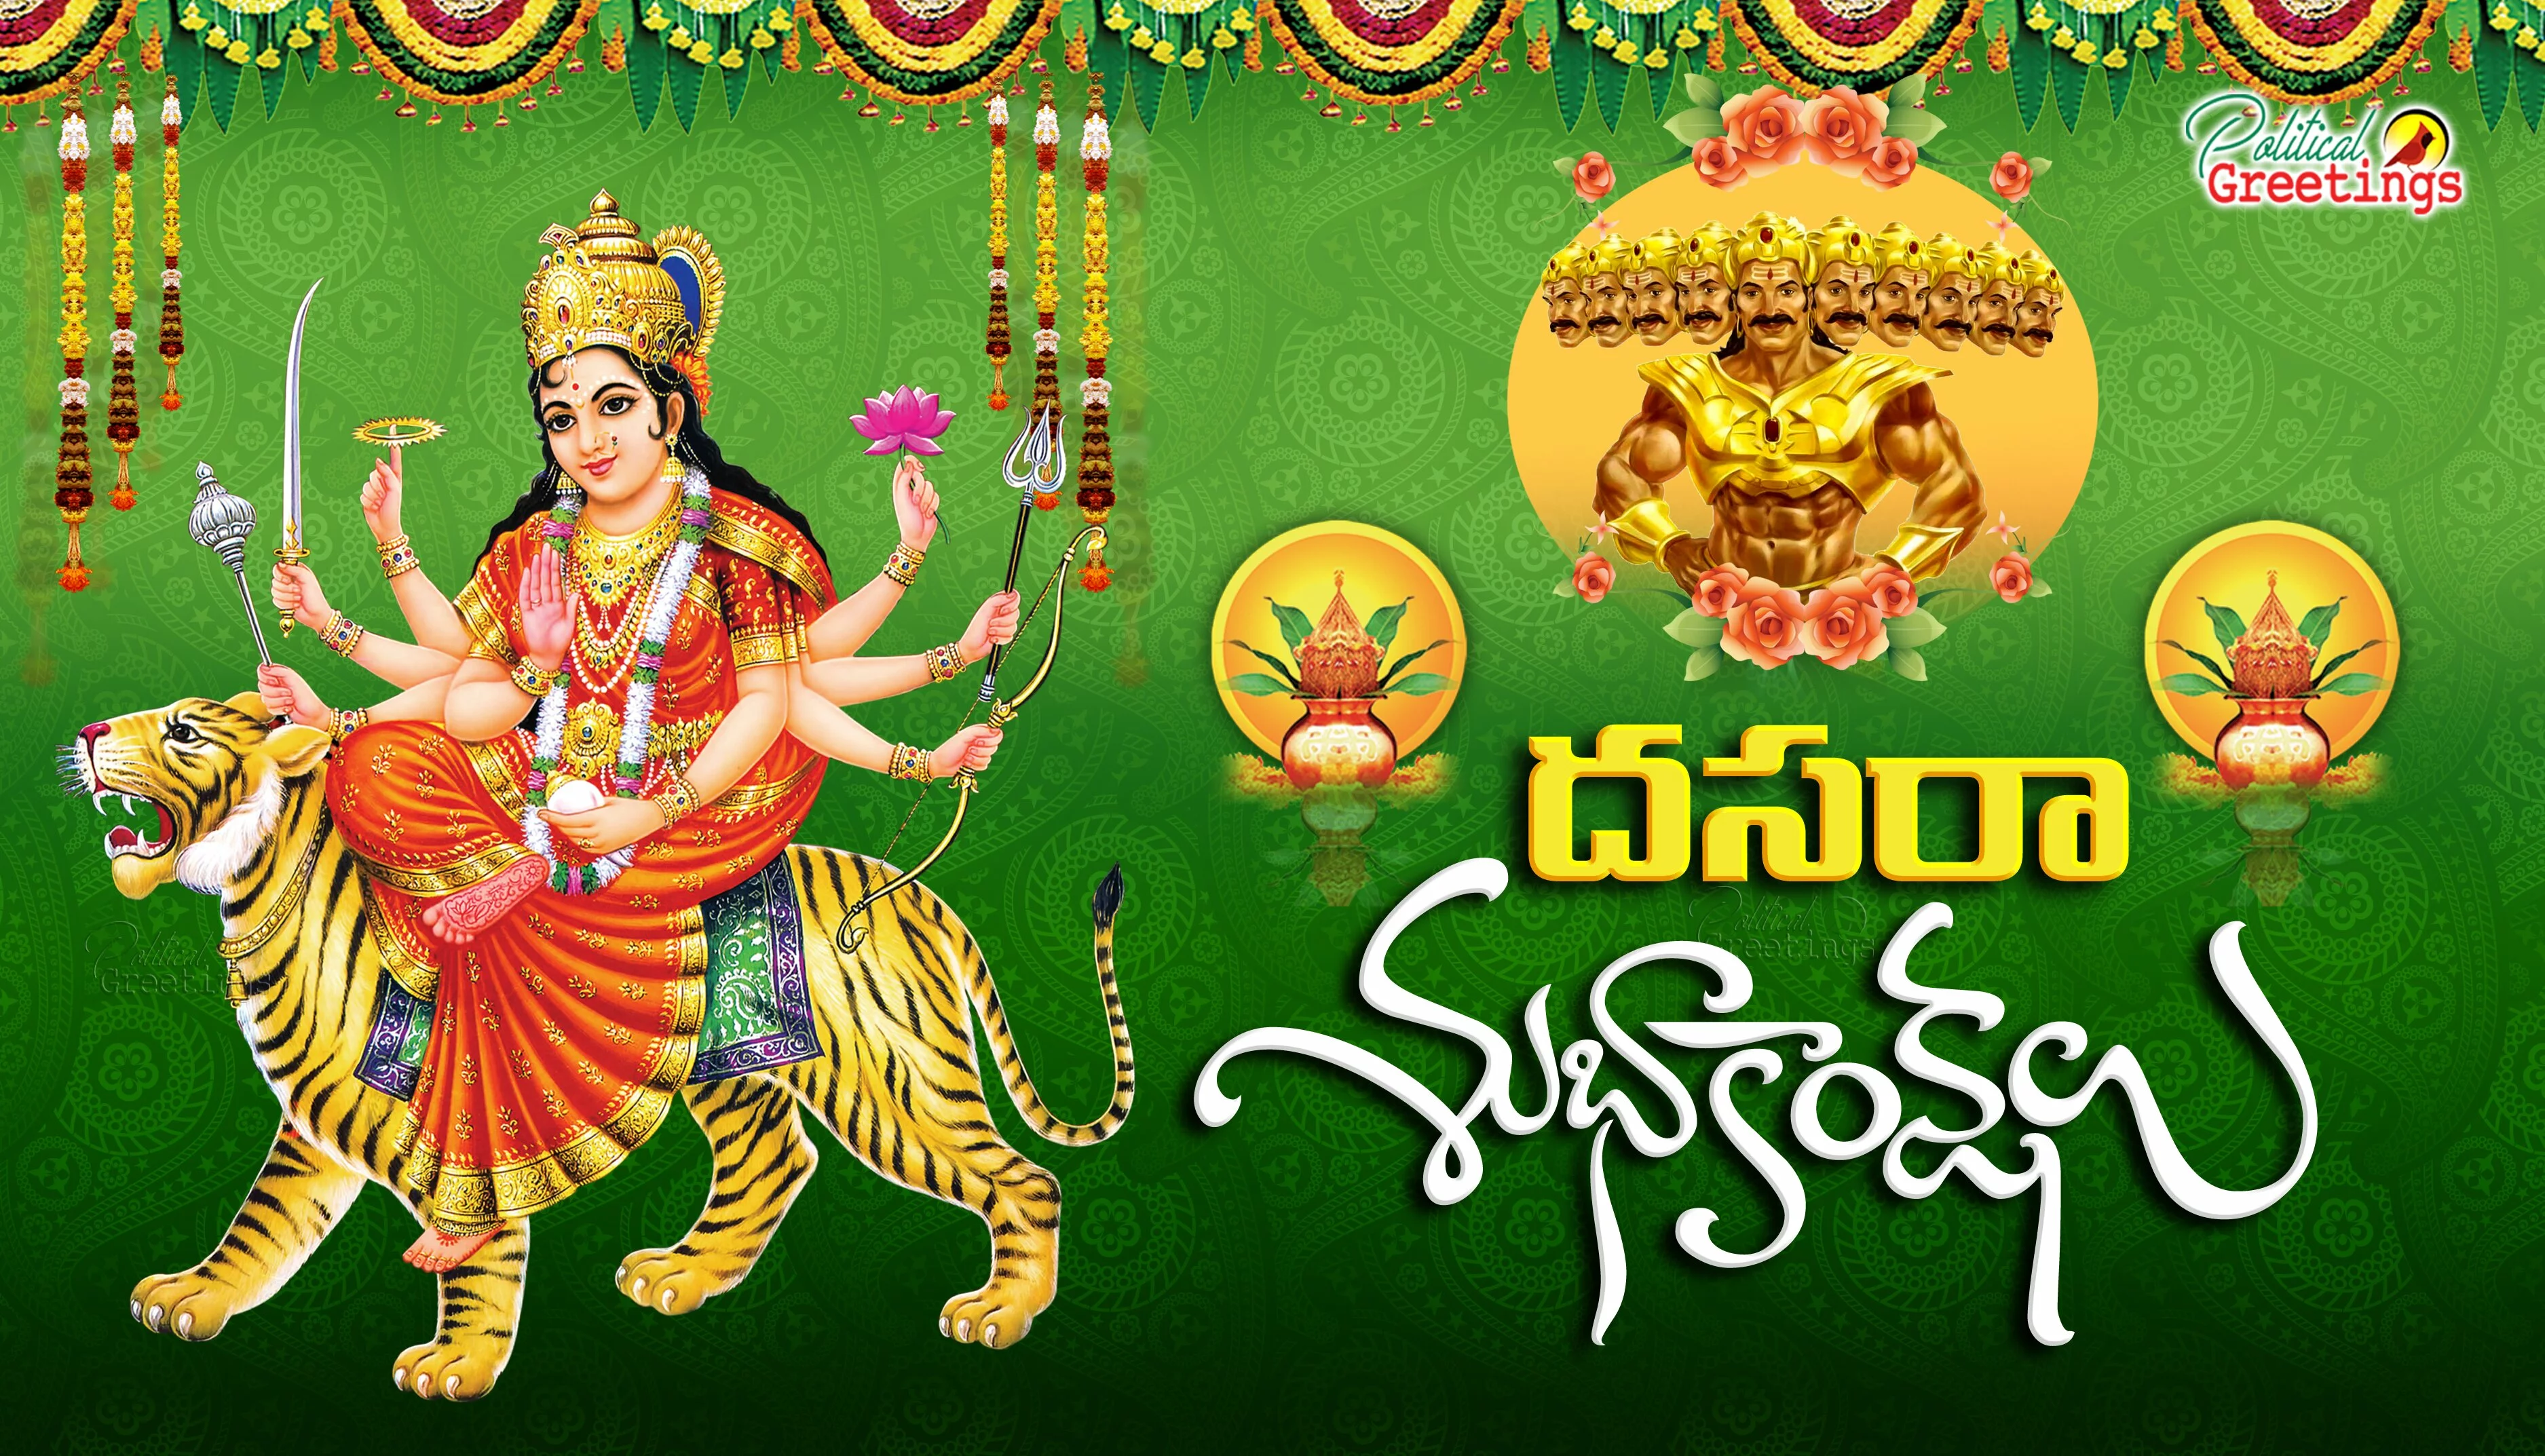 Latest Dussehra Vijayadasami Greetings with Goddess Durga Devi hd wallpapers Free download